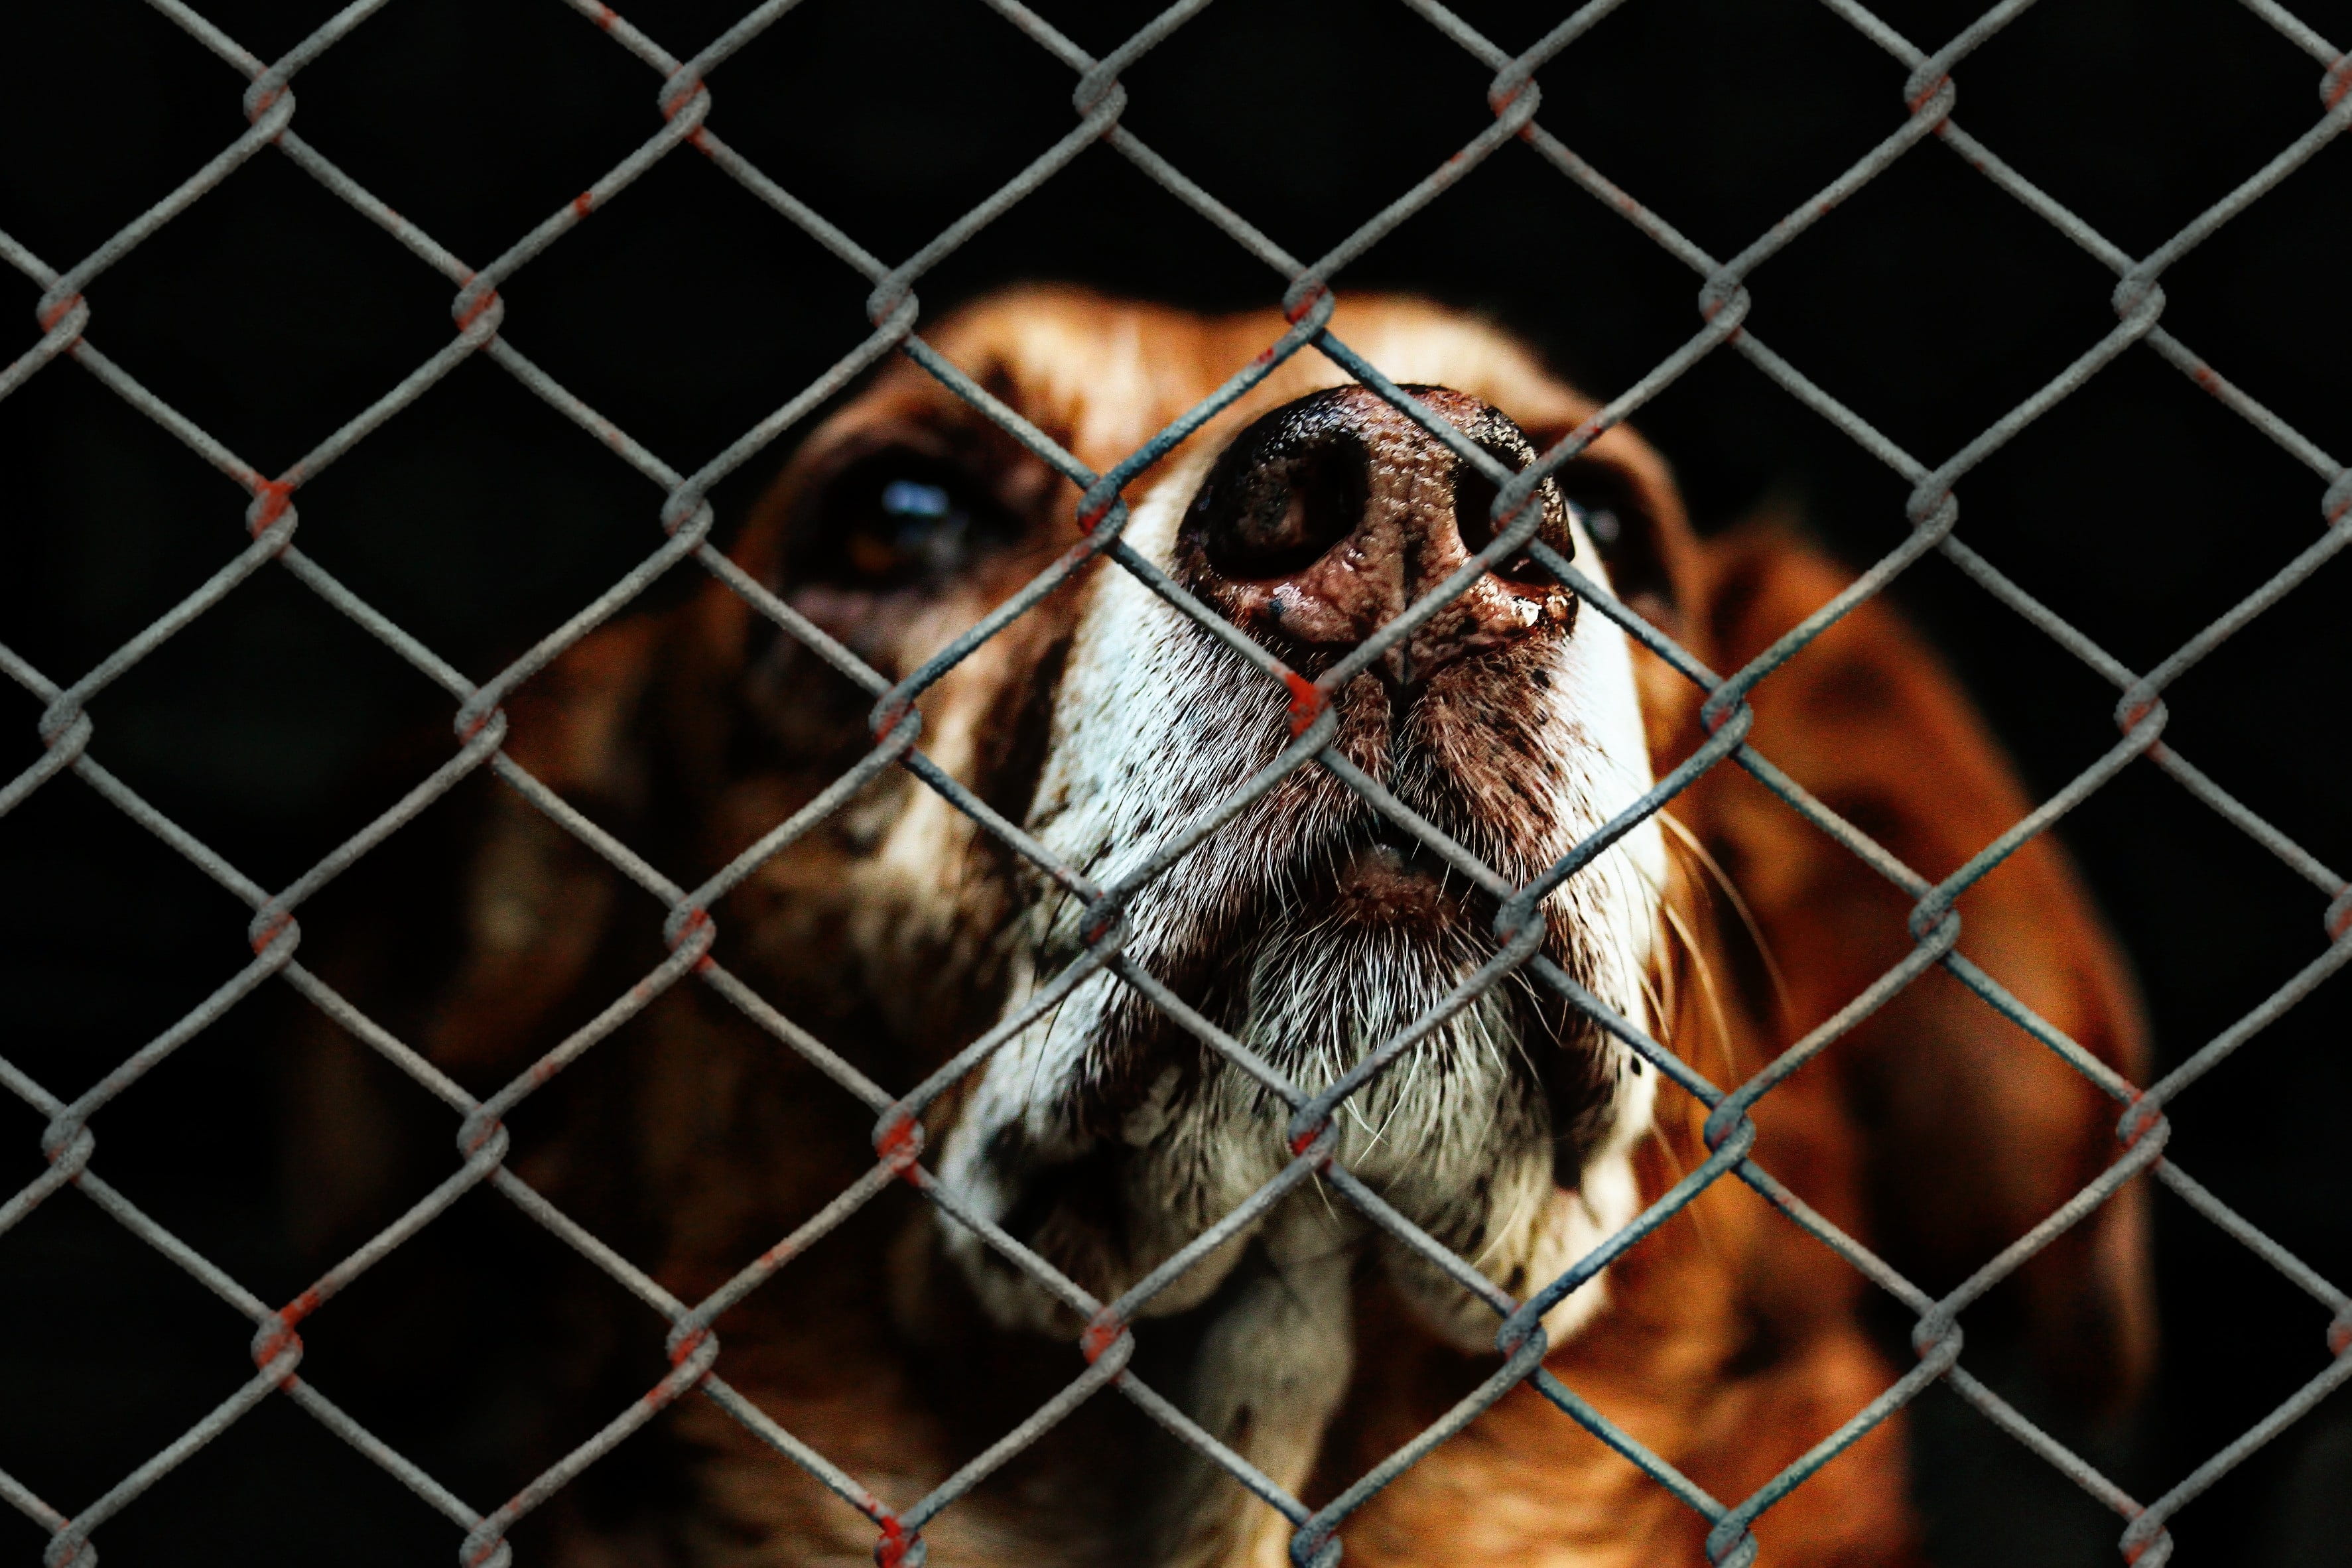 medium short-coated tan dog on focus photo, animal welfare, imprisoned